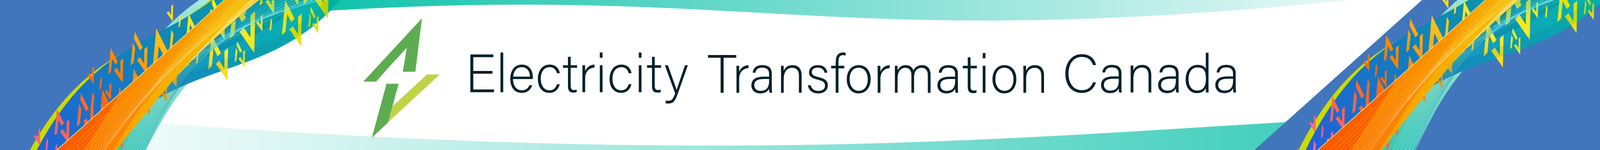 Electricity Transformation Canada 2022 logo